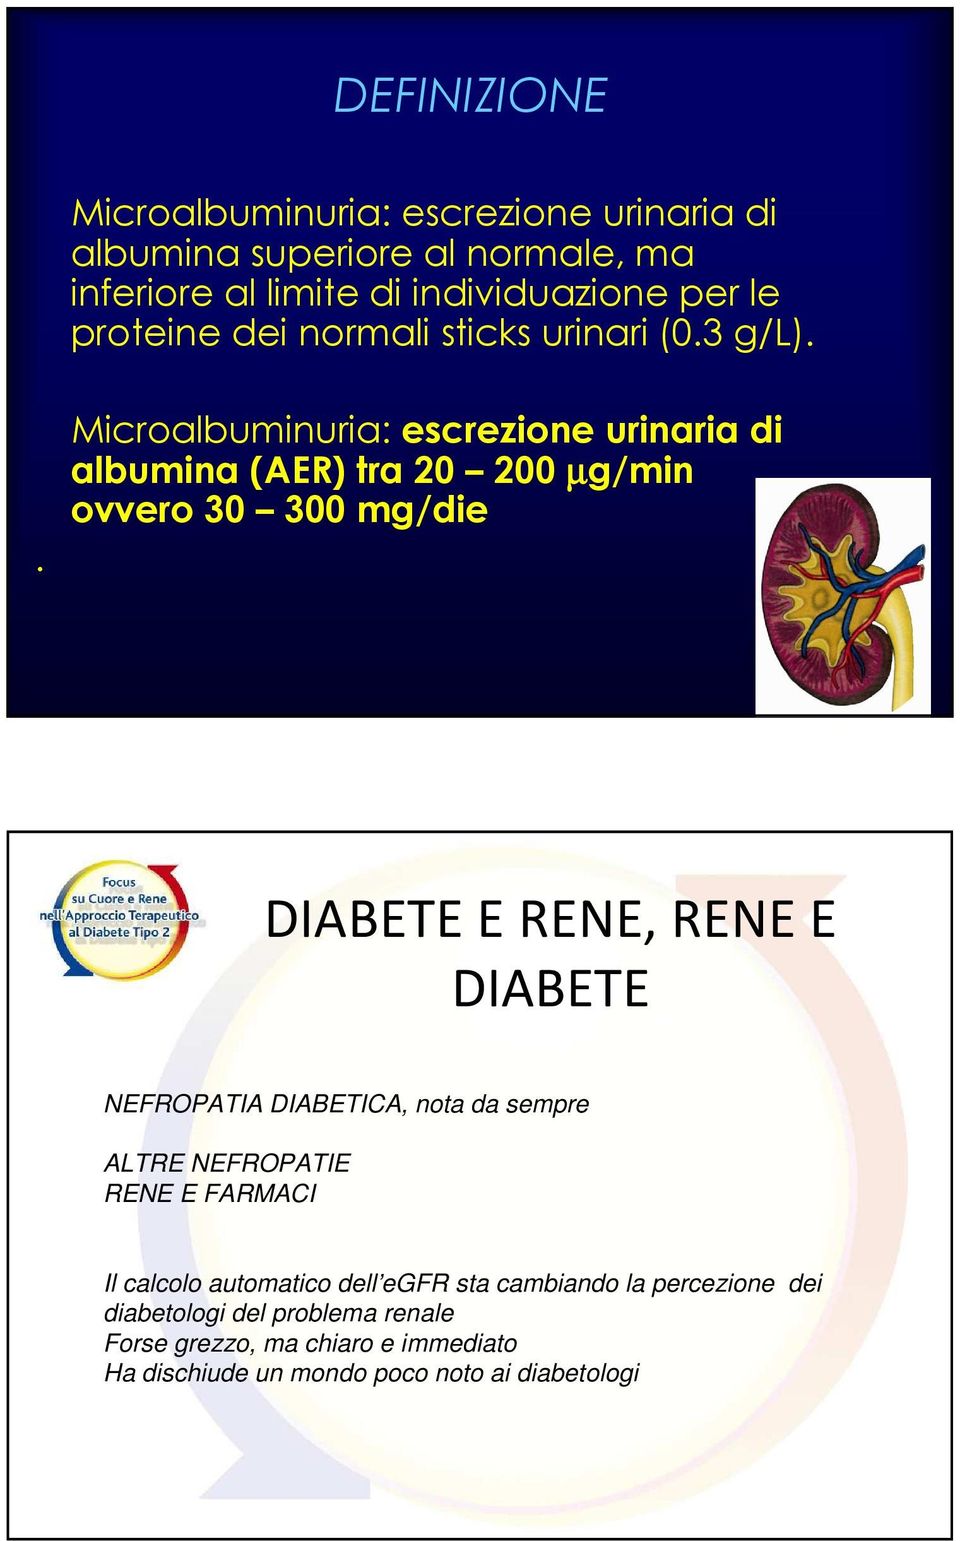 . Microalbuminuria: escrezione urinaria di albumina (AER) tra 20 200 µg/min ovvero 30 300 mg/die DIABETE E RENE, RENE E DIABETE NEFROPATIA